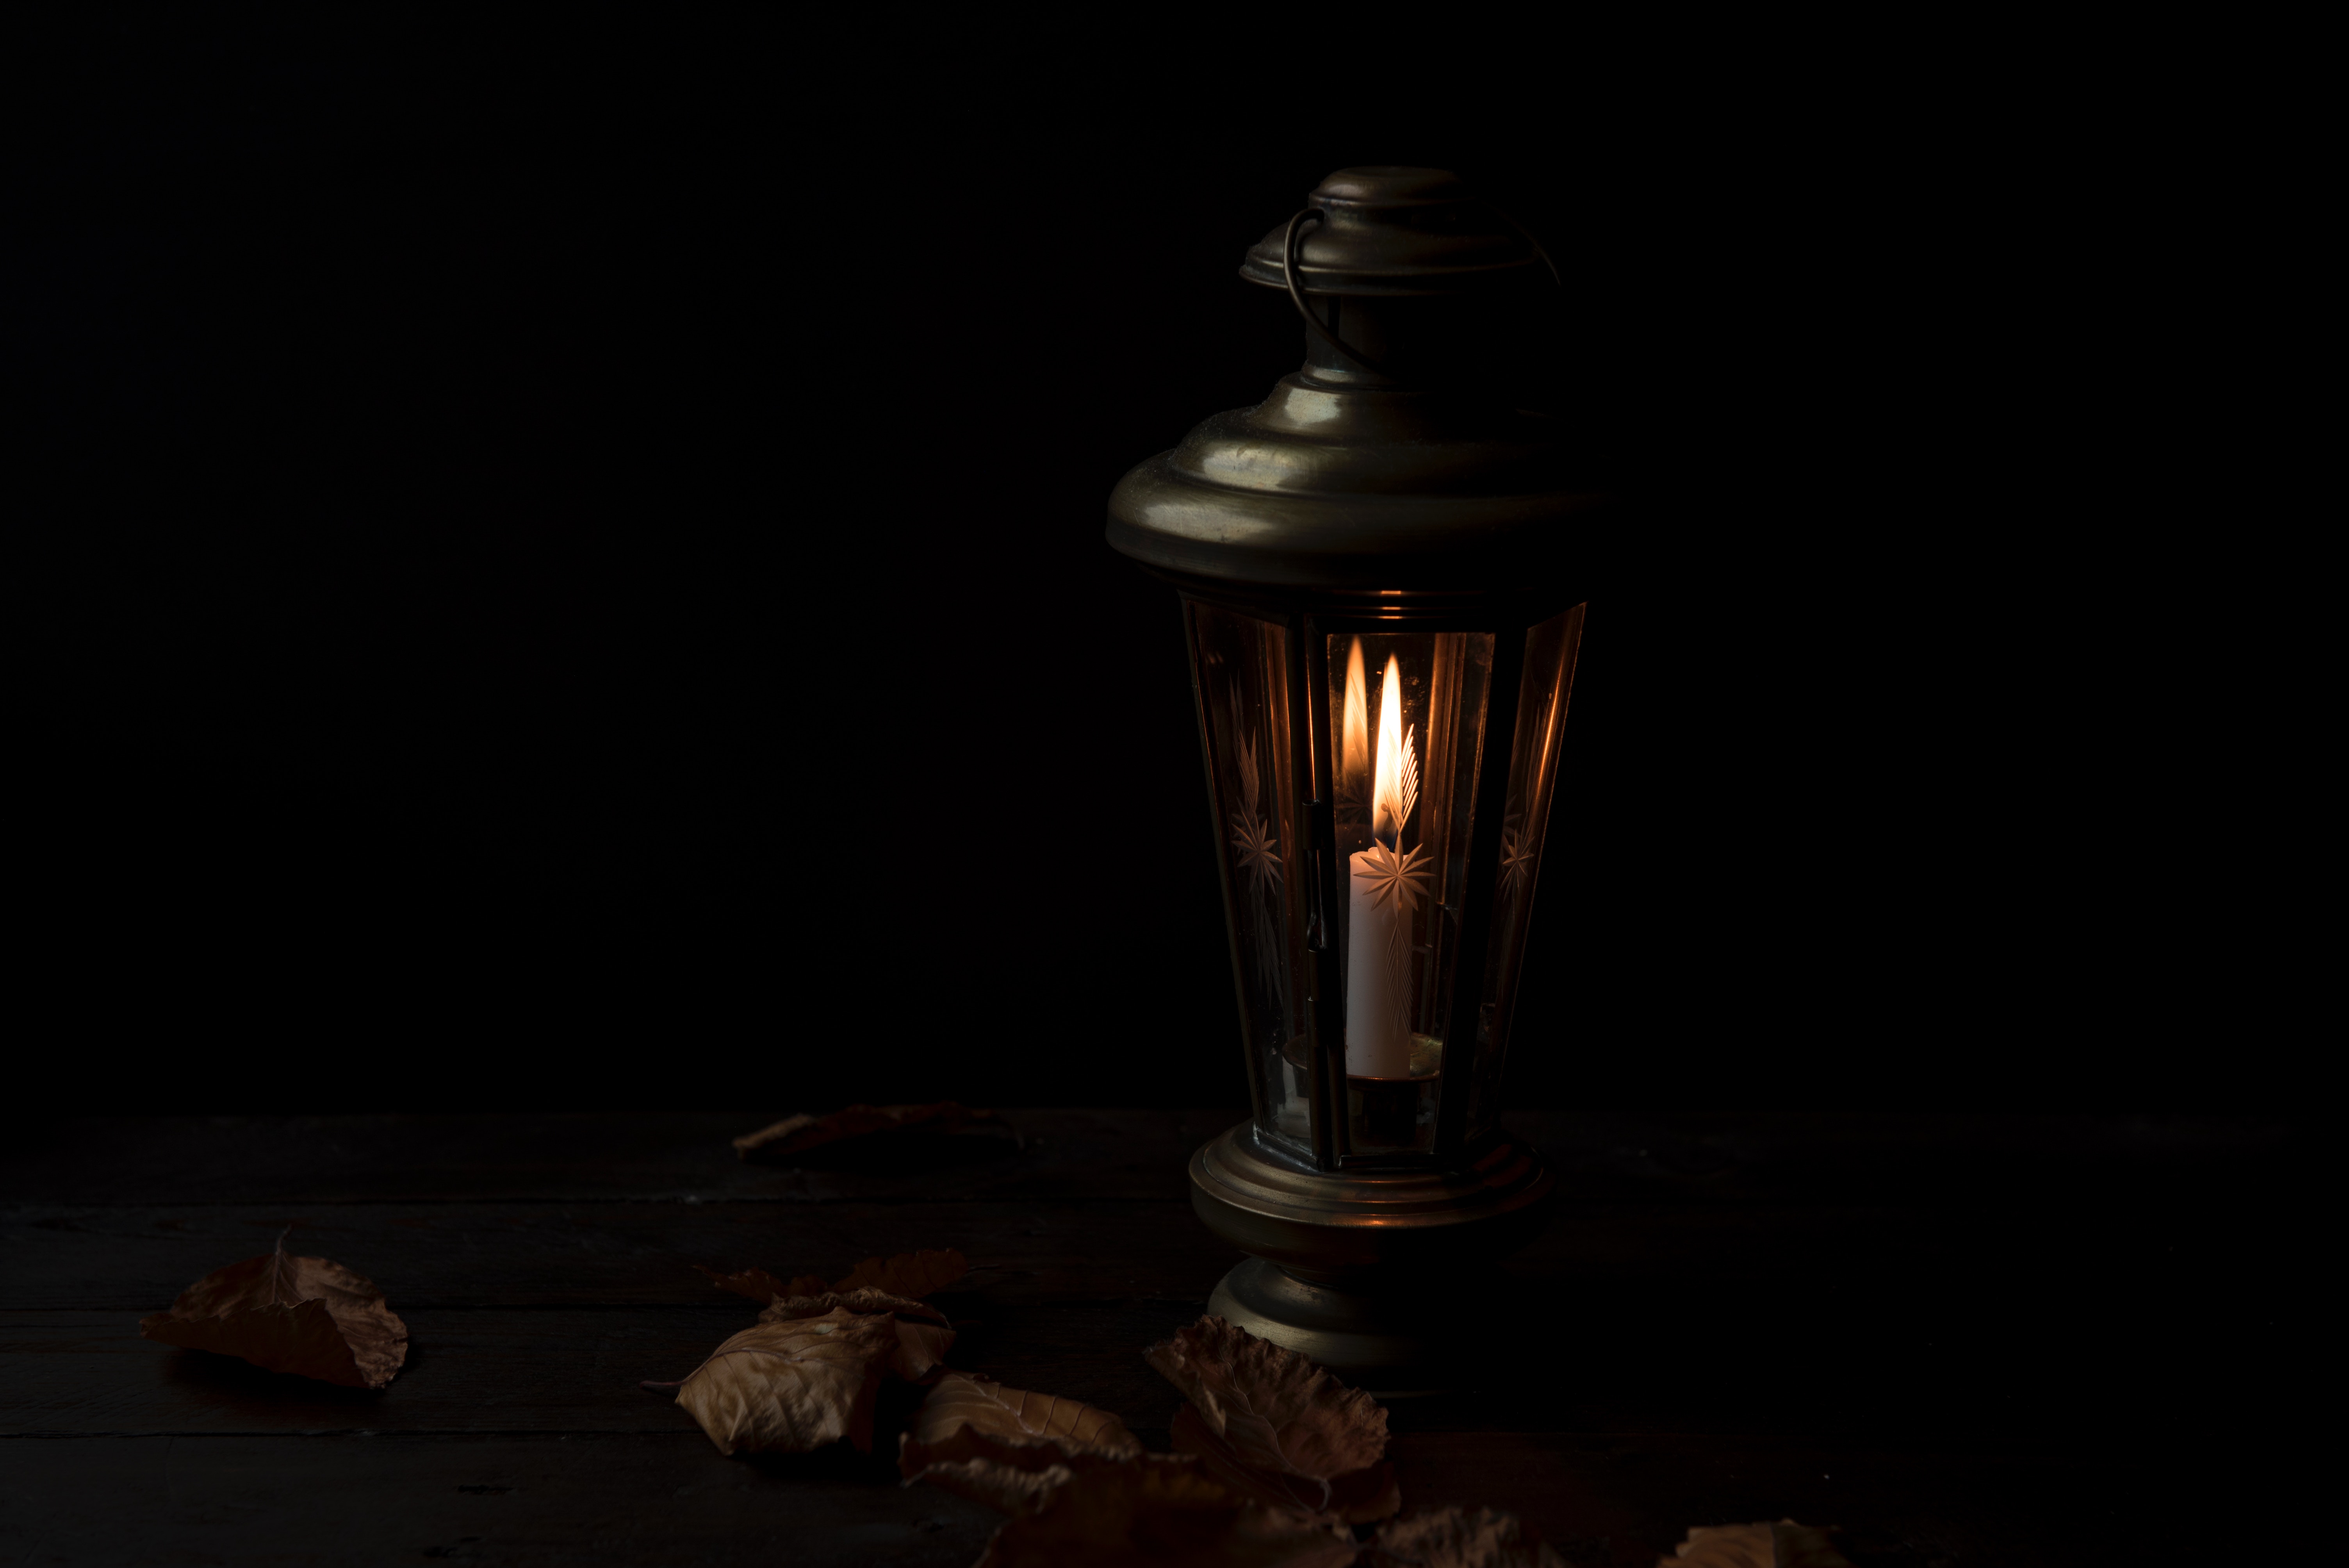 night, candle, dark, lamp